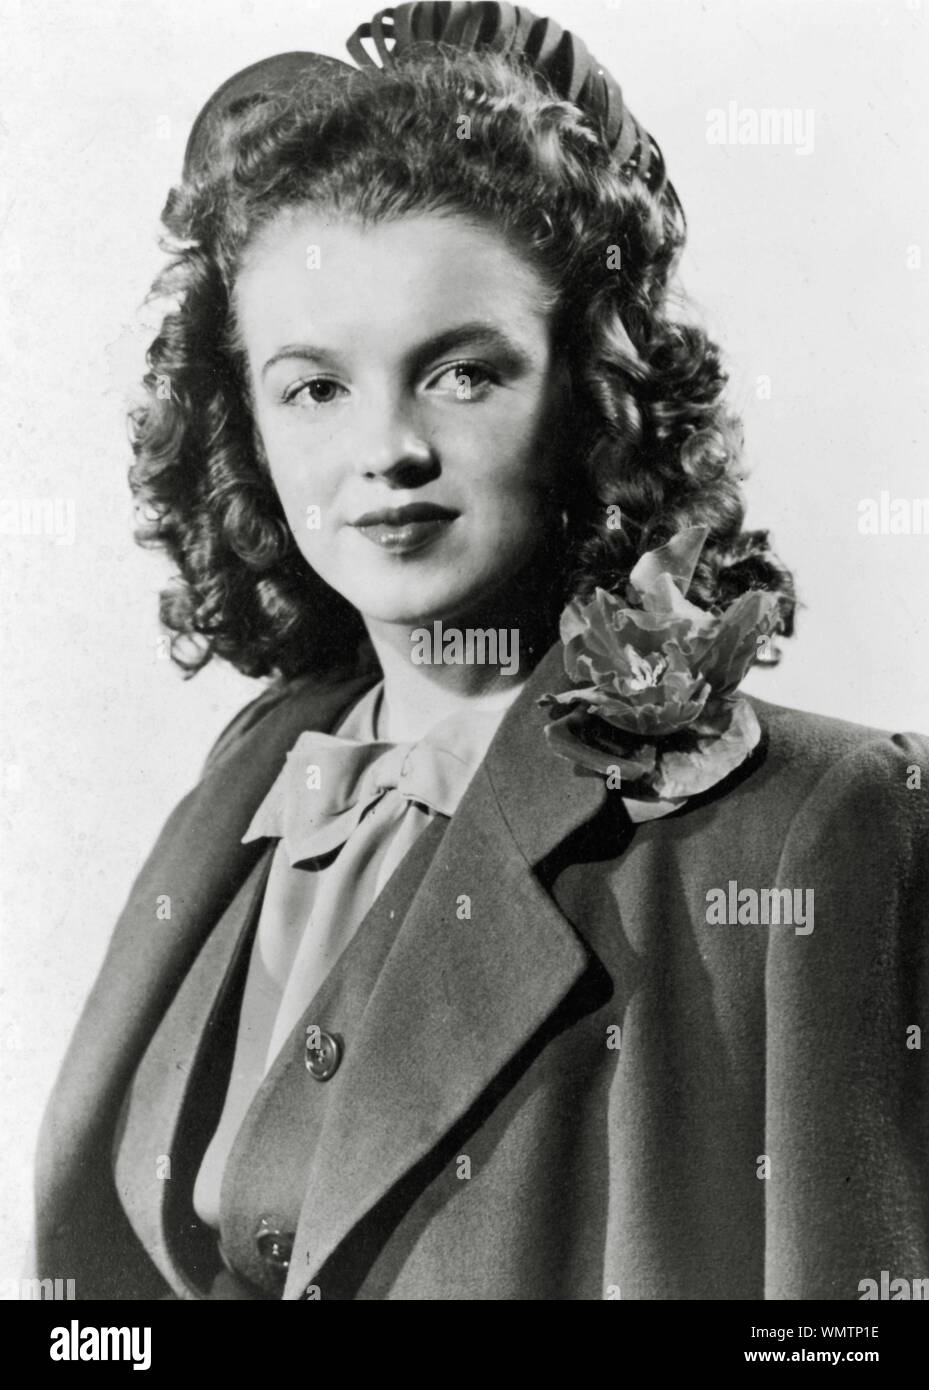 Norma Jeane Mortenson (aka Marilyn Monroe) as a teenager, circa 1941 File  Reference # 33848-566THA Stock Photo - Alamy